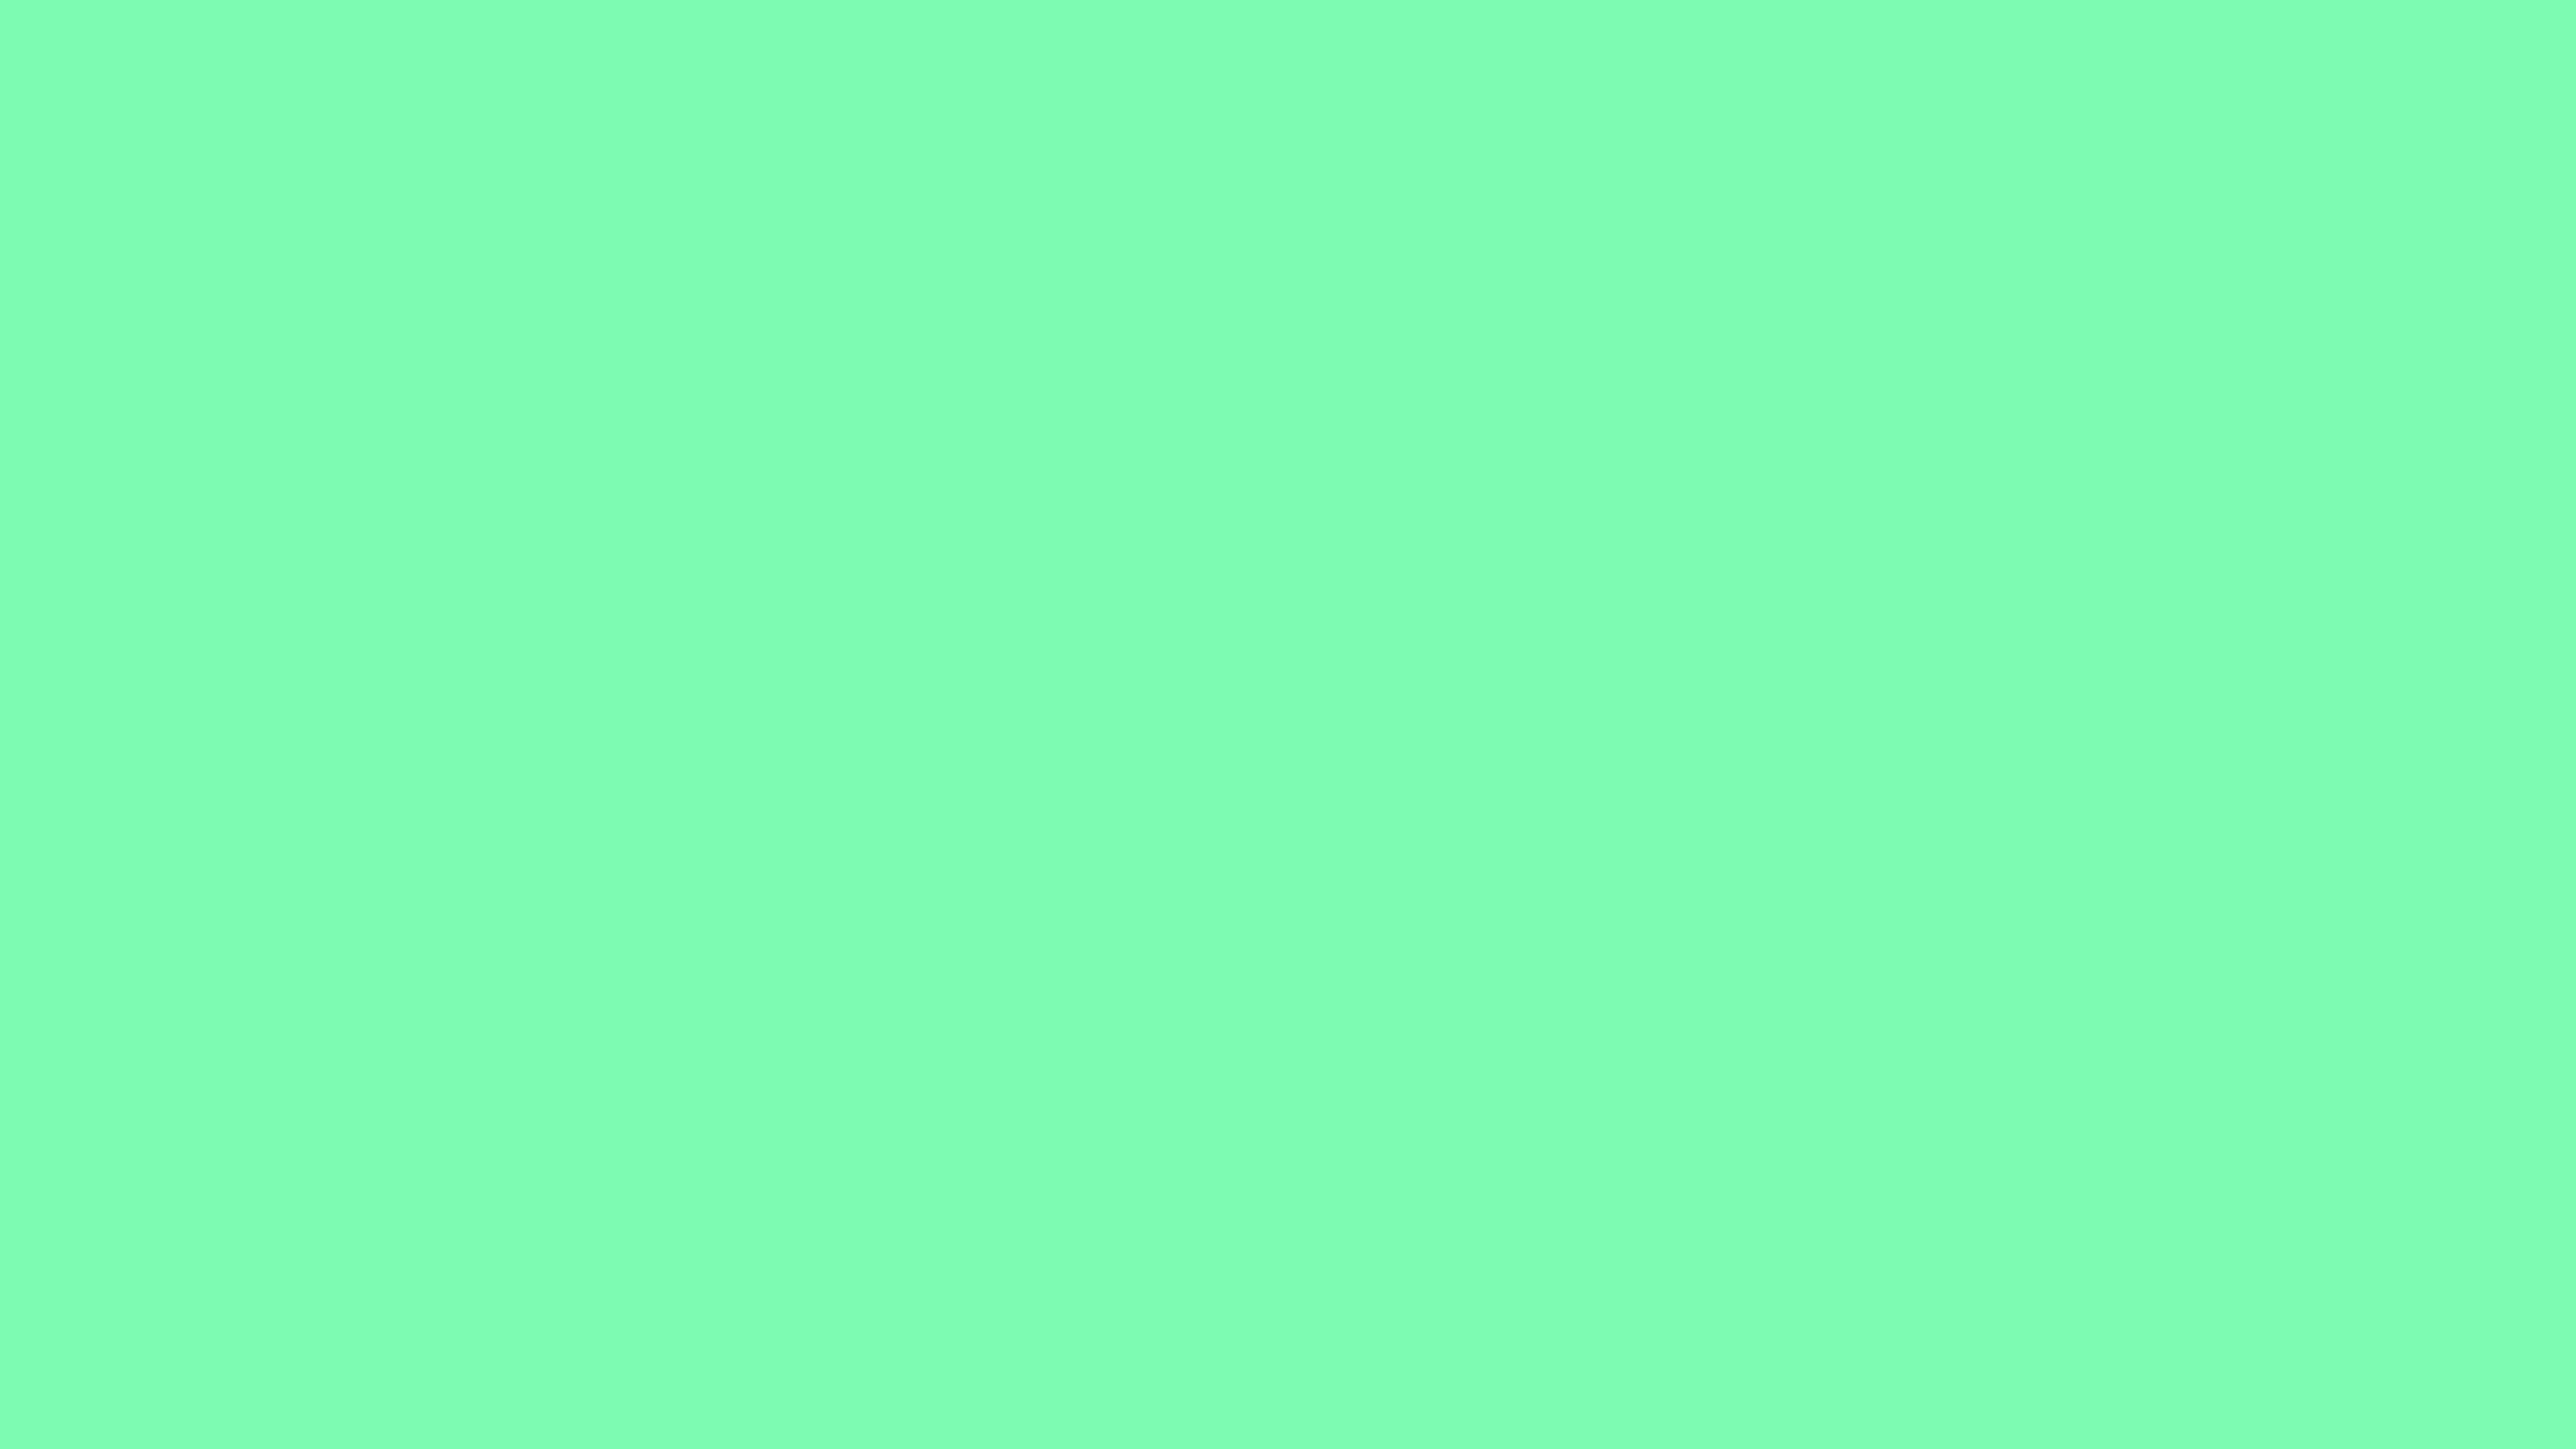 Light Blue Green Solid Color Background Image | Free Image Generator